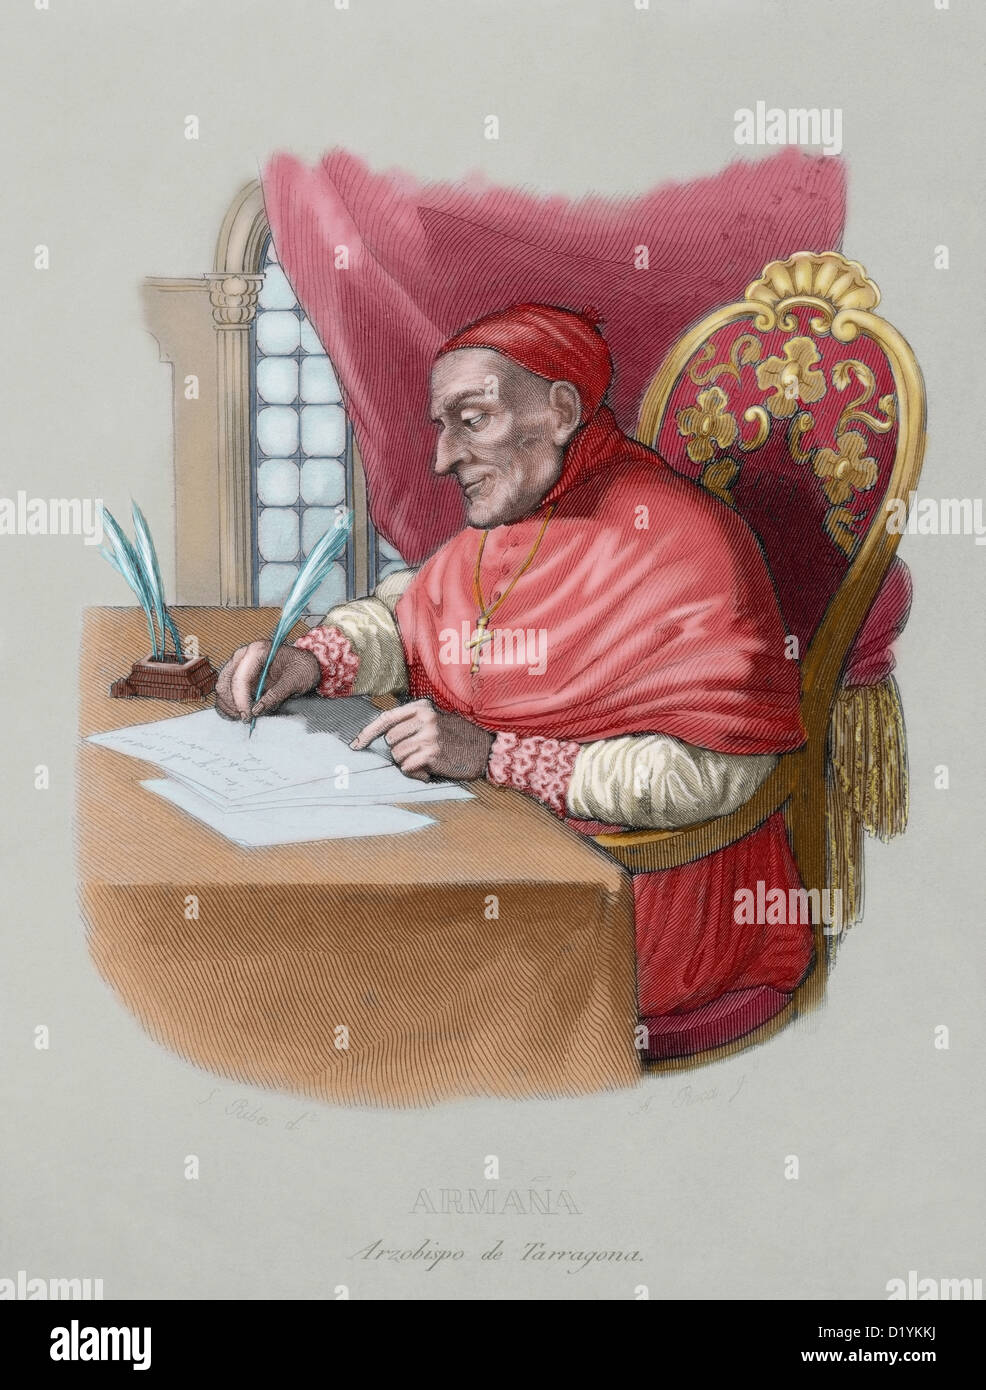 Francisco Armanya Font (1718-1803). Ecclesiastical and theologian. Colored engraving. Stock Photo